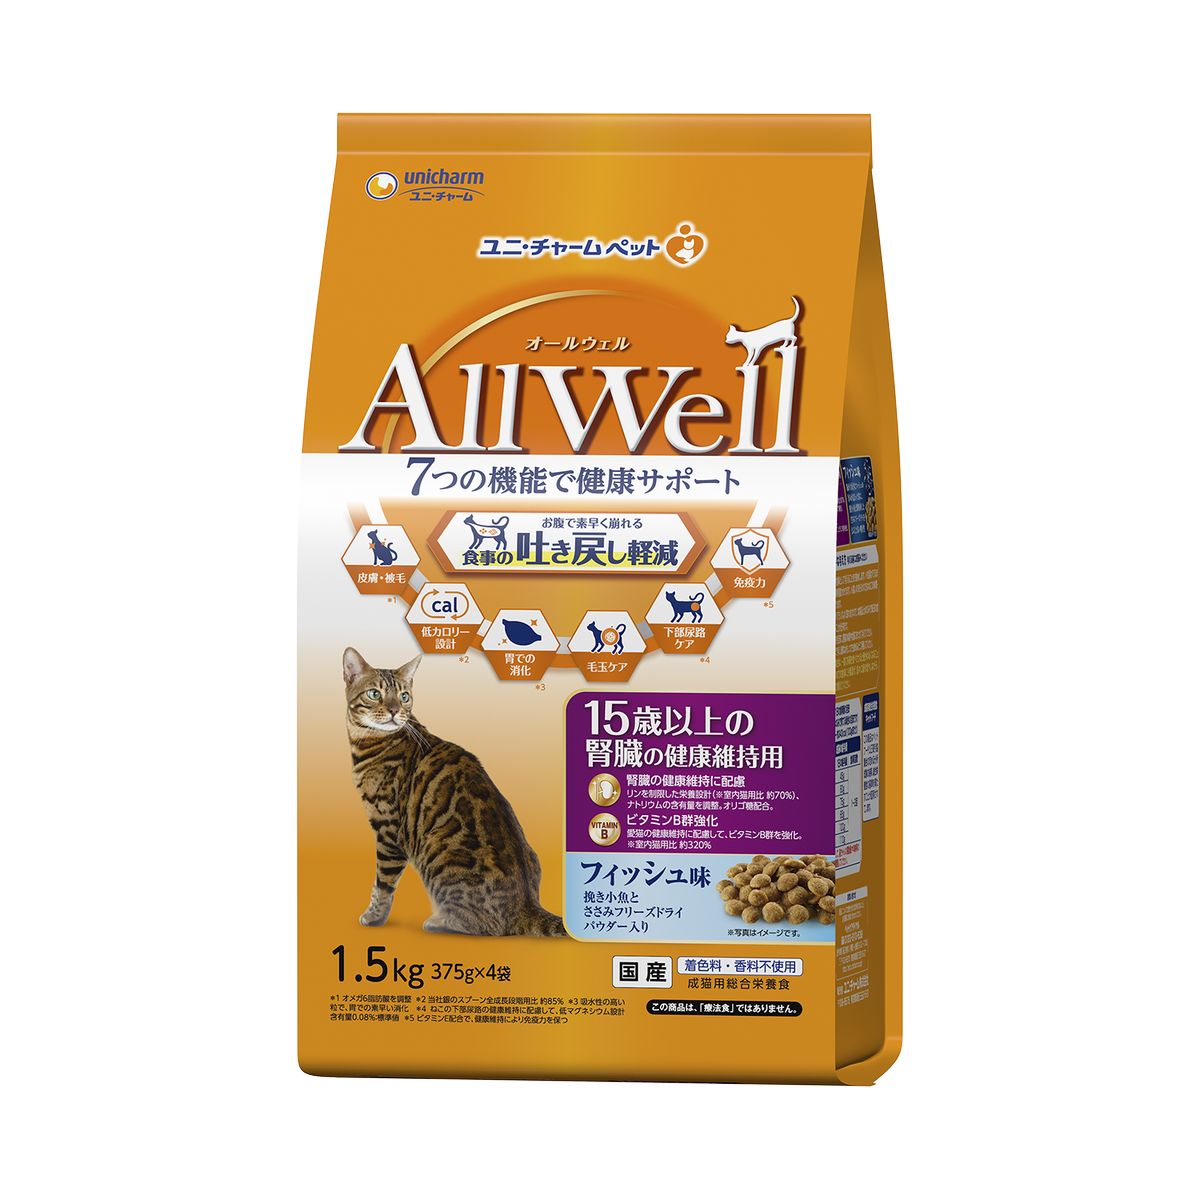 AllWell15歳以上の腎臓の健康維持用フィッシュ味挽き小魚とささみフリーズドライパウダー入り1.5kg×5